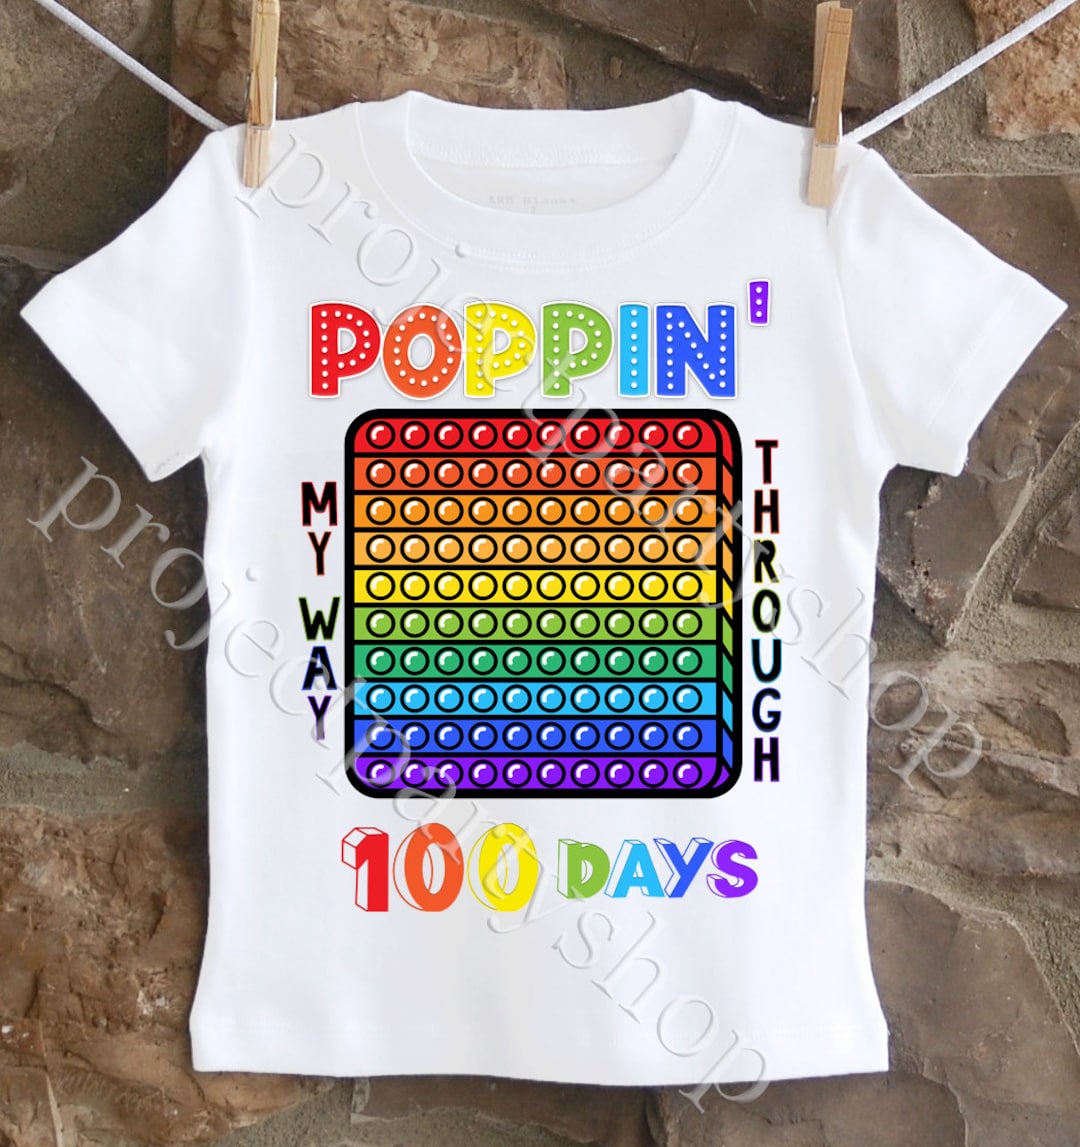 Monica alledaags Digitaal 100th Day of School Pop It Shirt 100 Days of School Shirt - Etsy